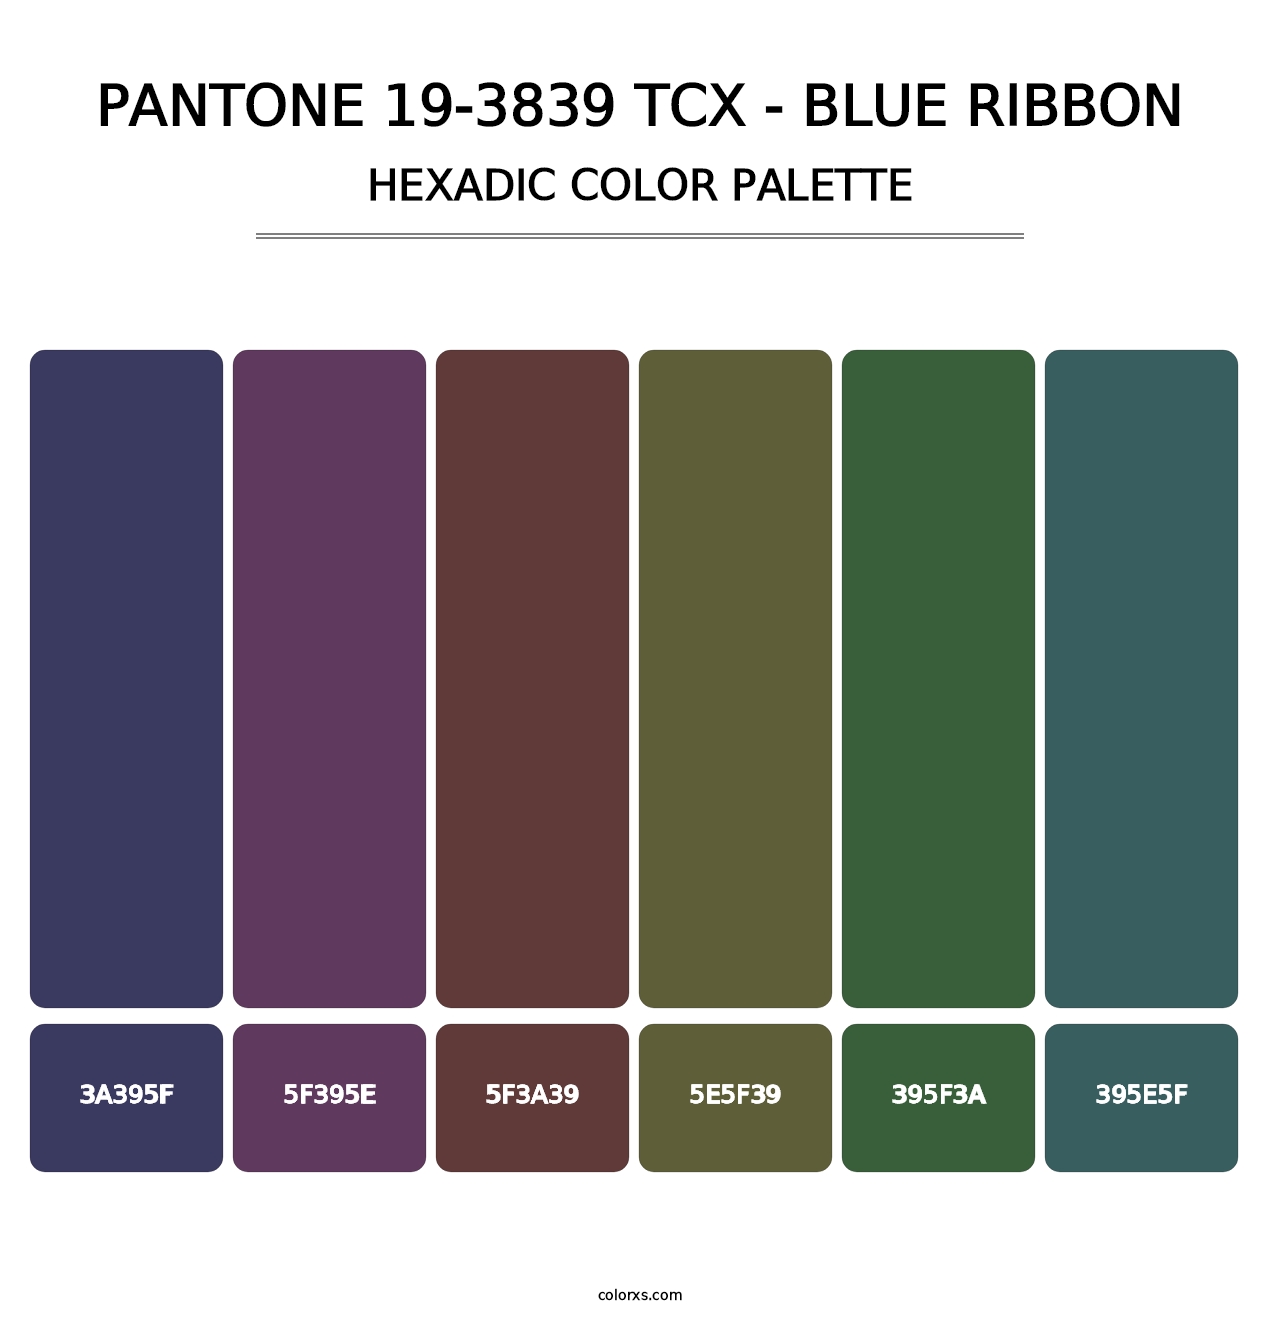 PANTONE 19-3839 TCX - Blue Ribbon - Hexadic Color Palette